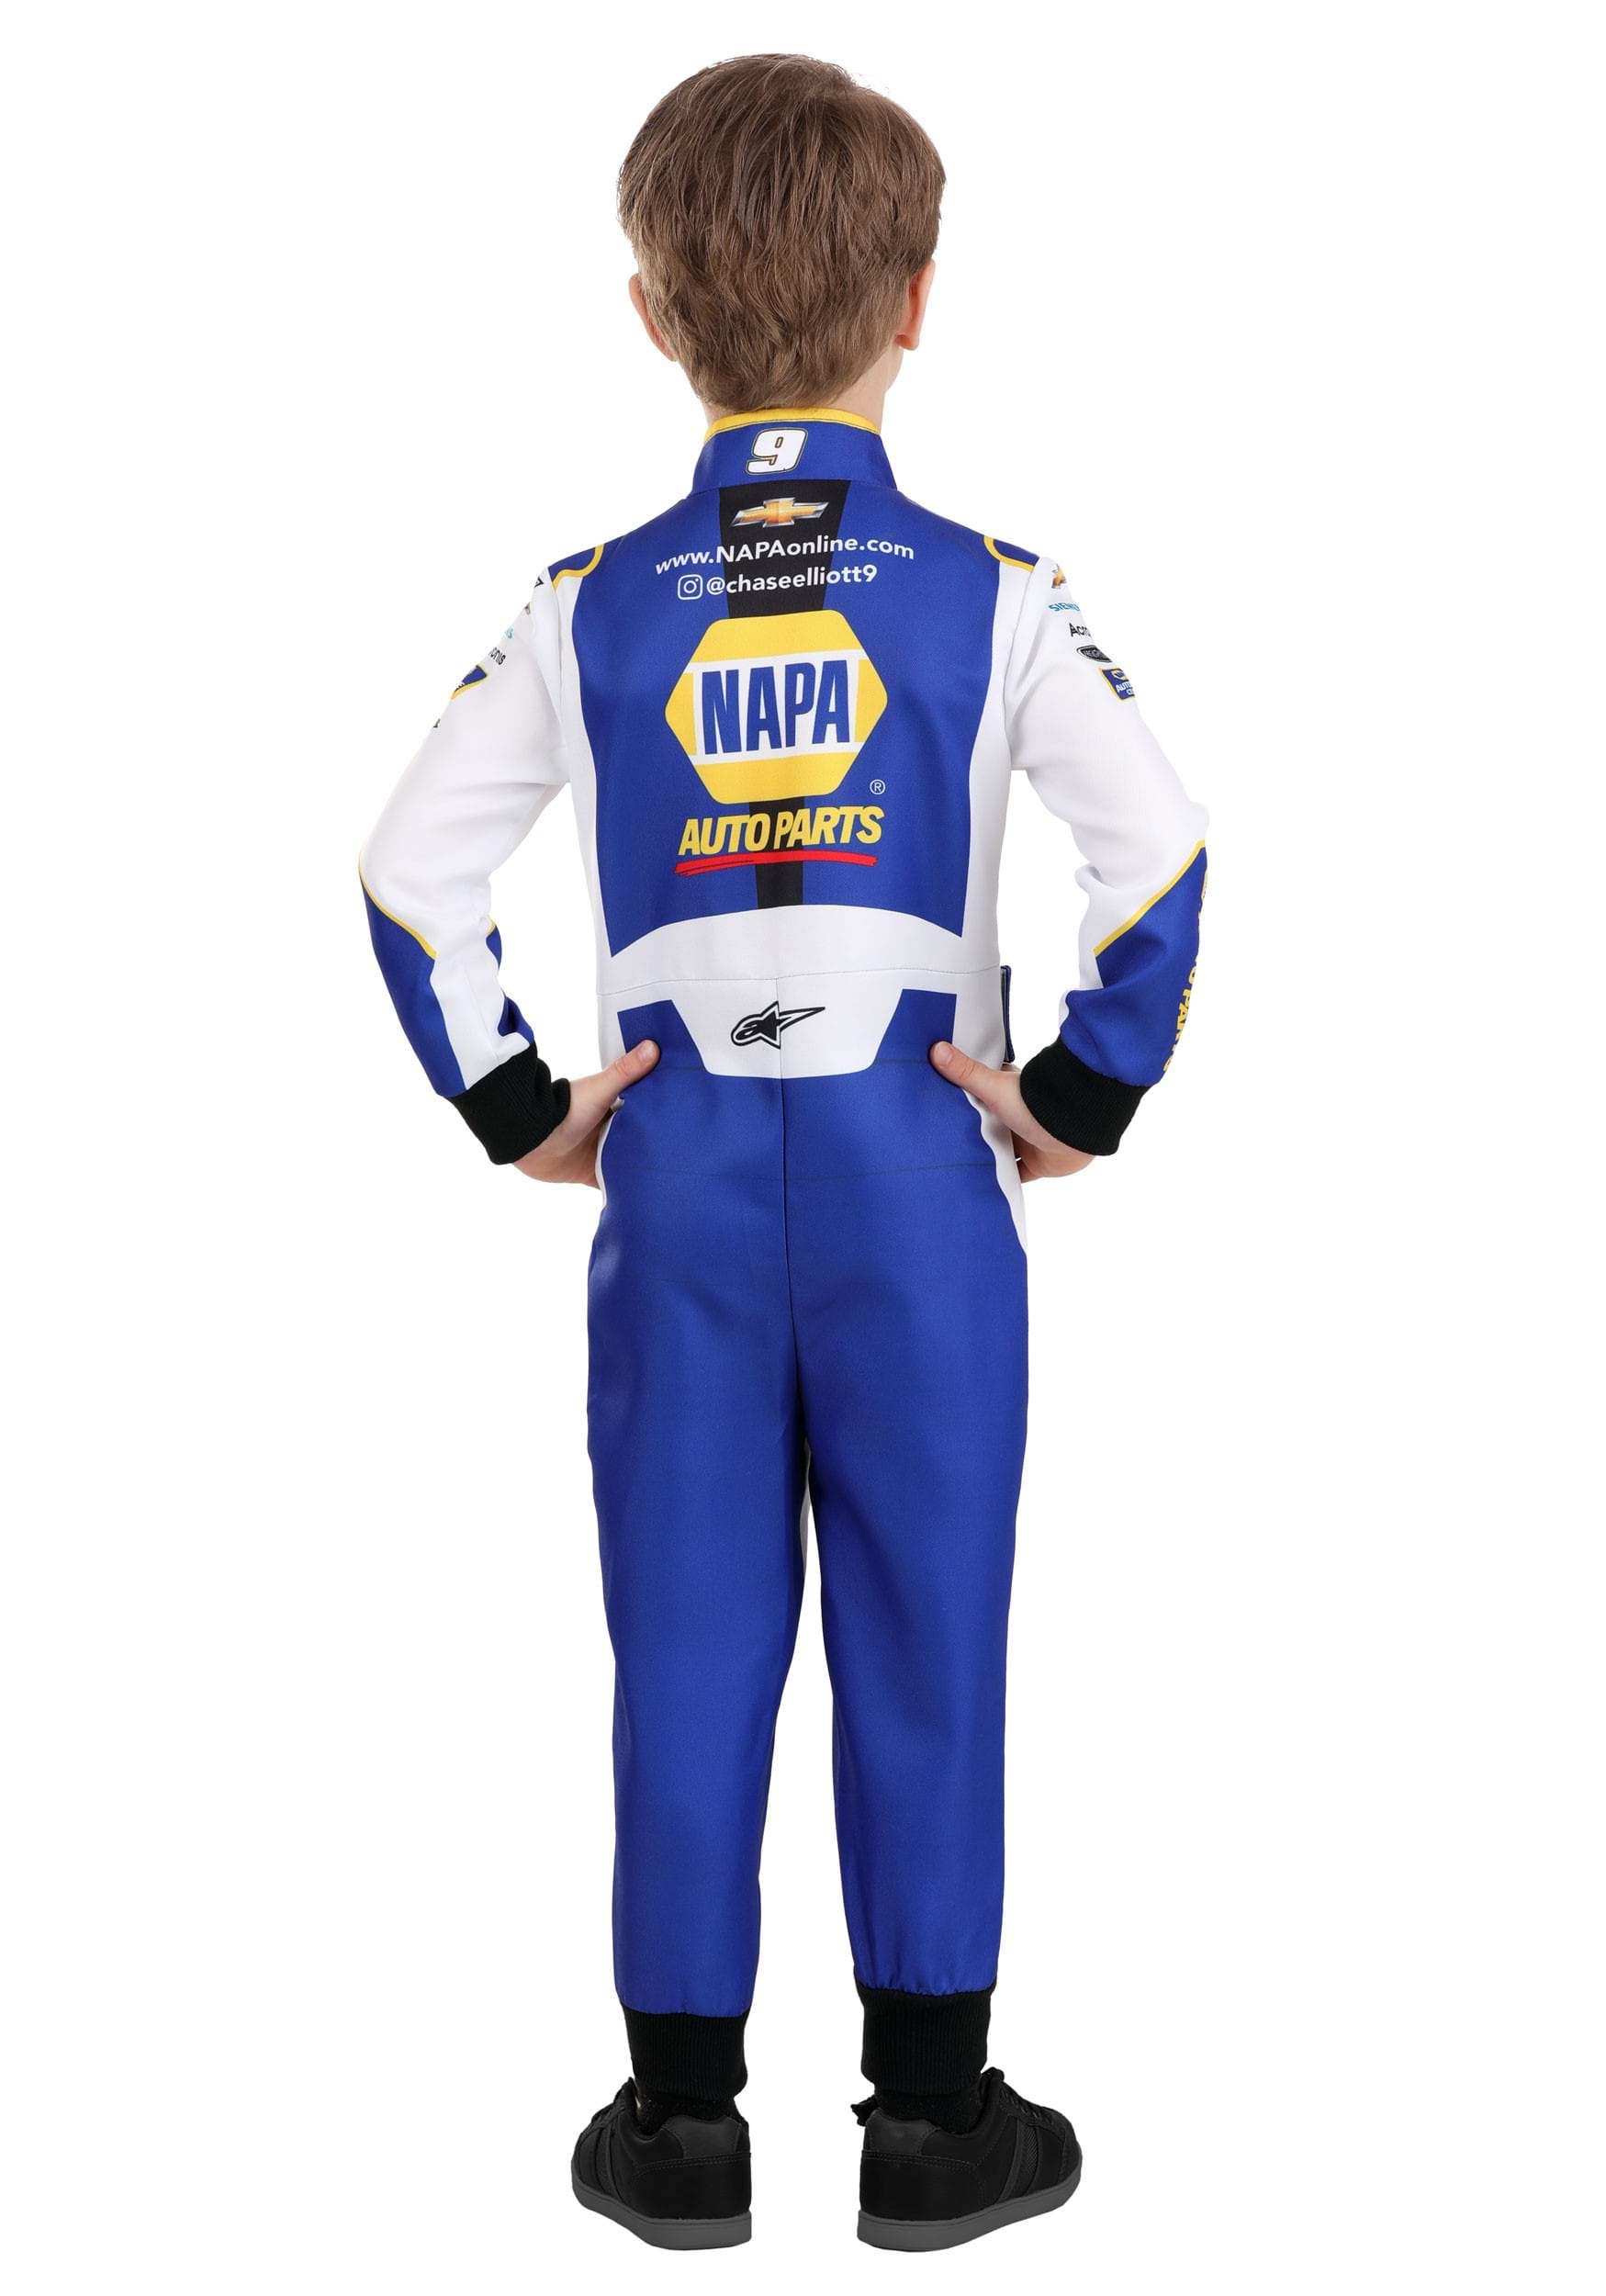 NASCAR Chase Elliott Jumpsuit Boy's Costume